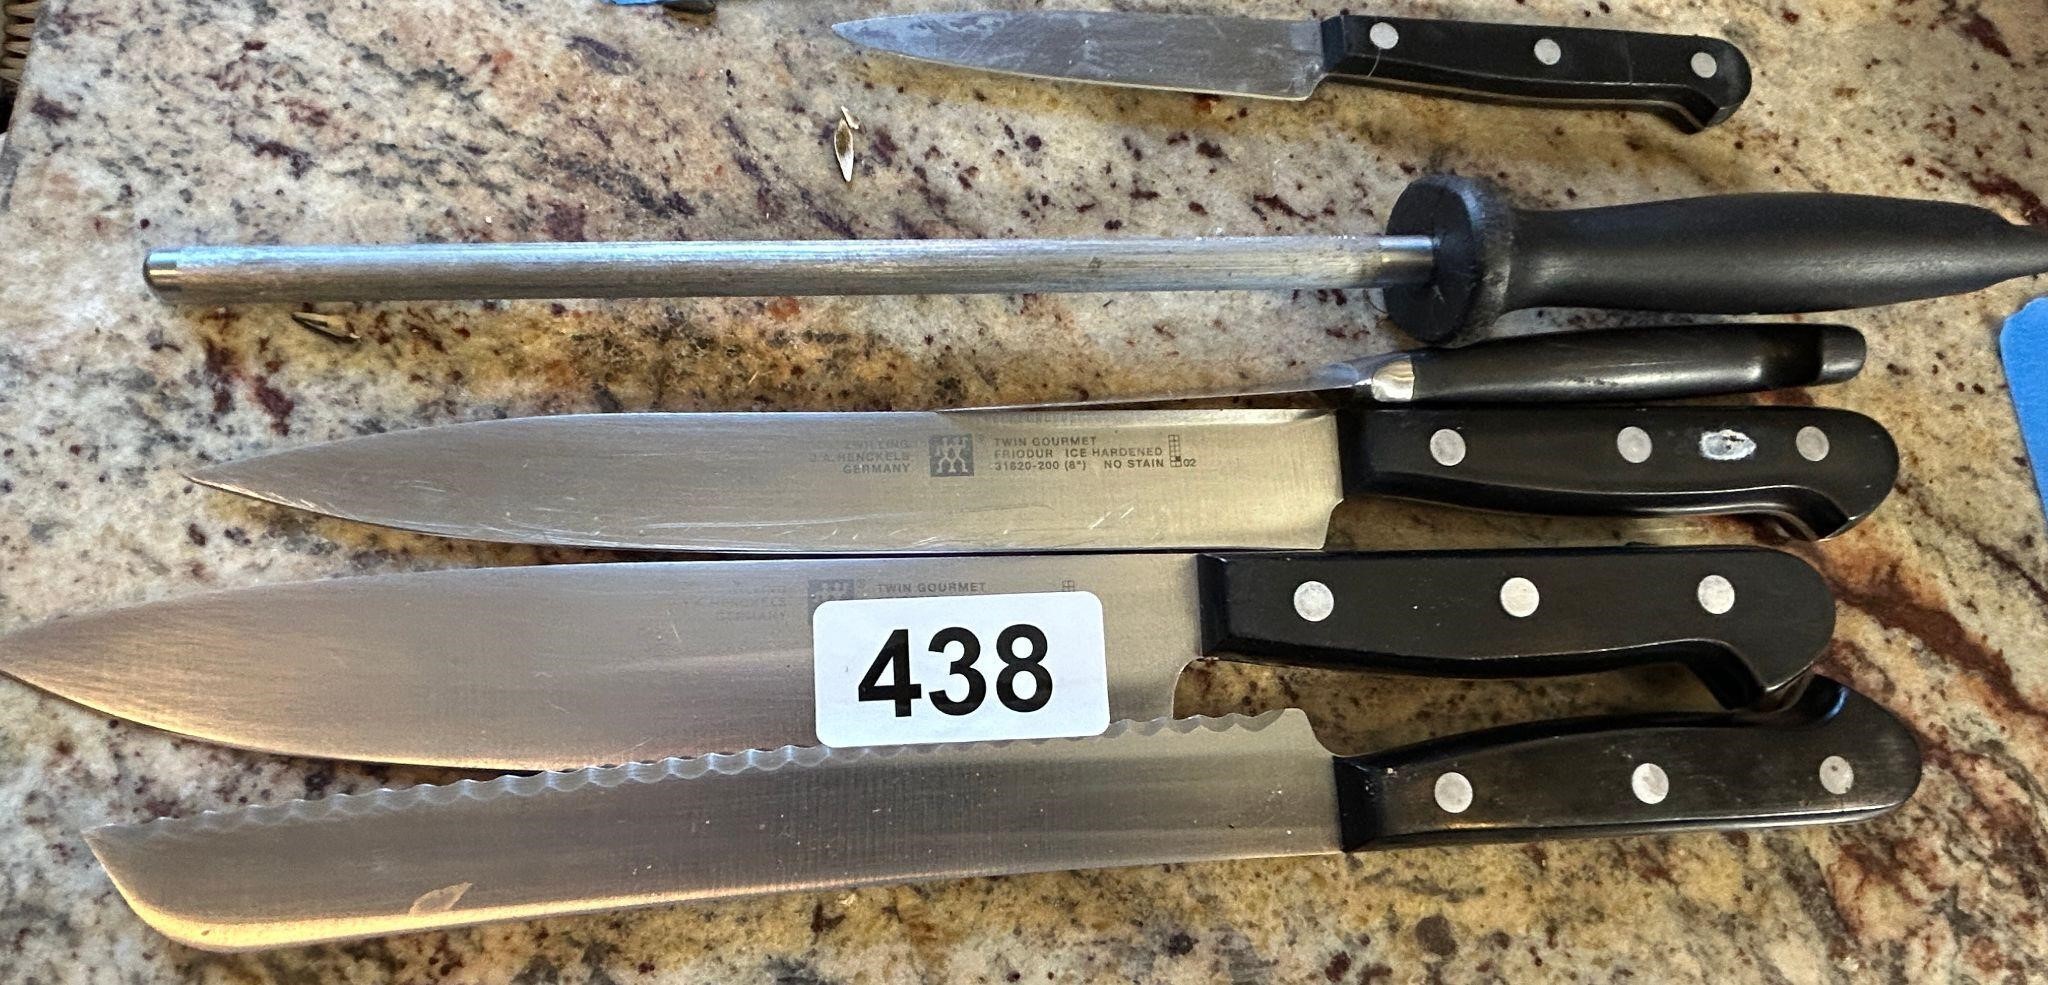 J A Henckils German Knives